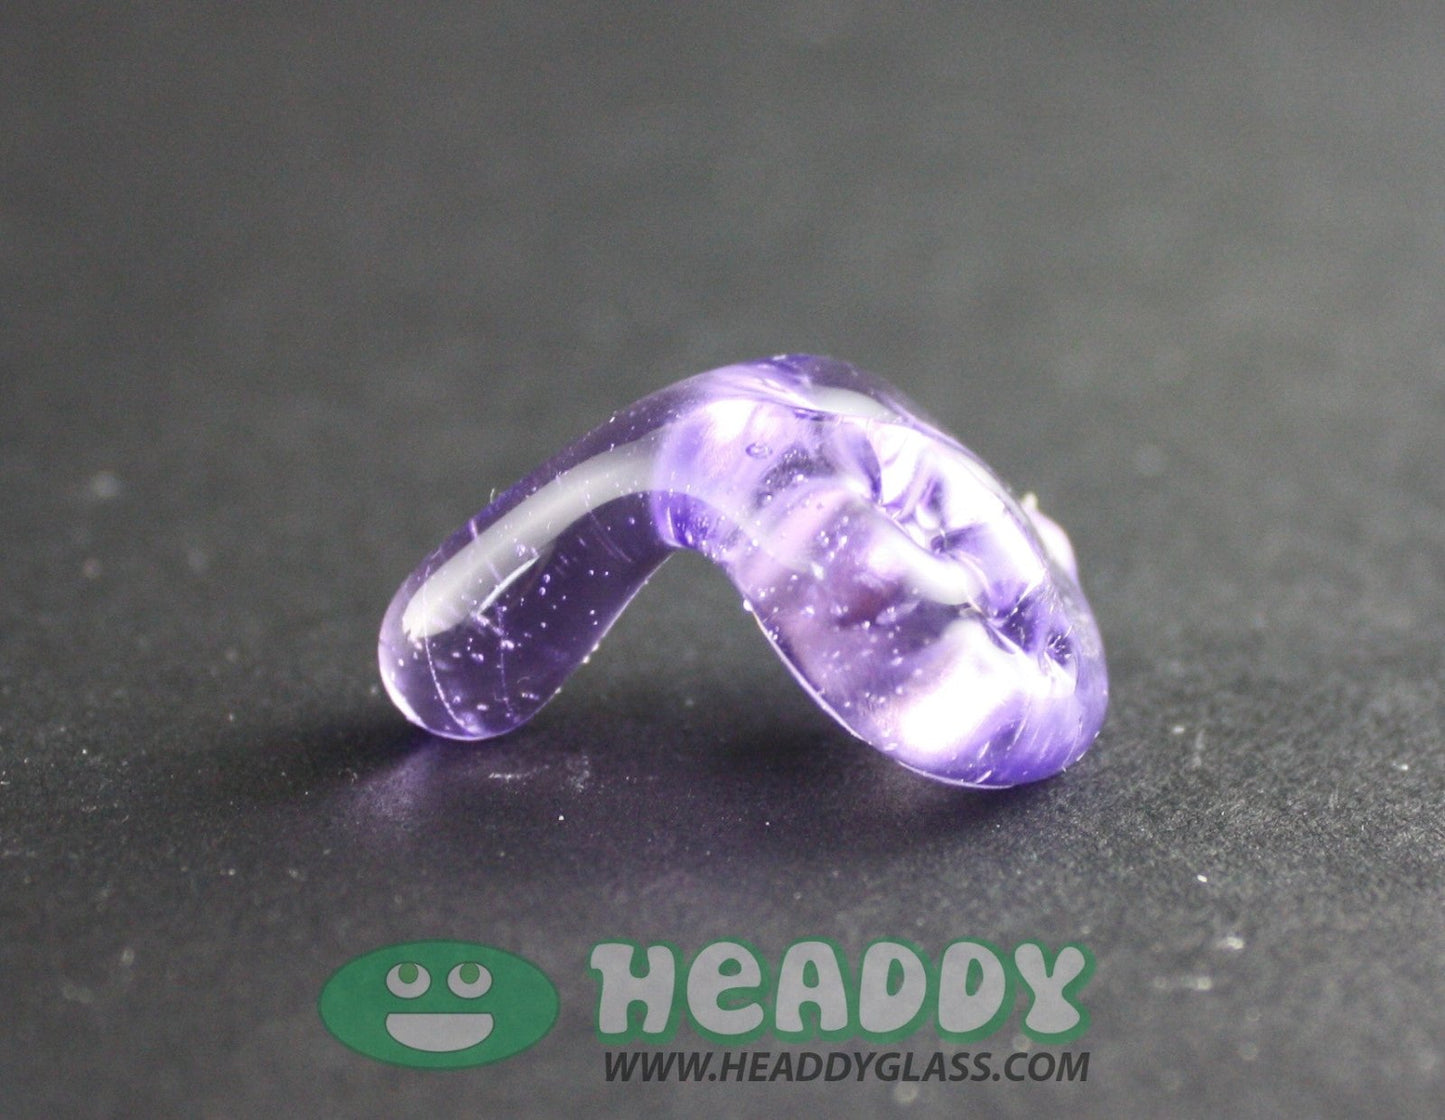 Adami - Drippy Pin #2 - Headdy Glass - HG